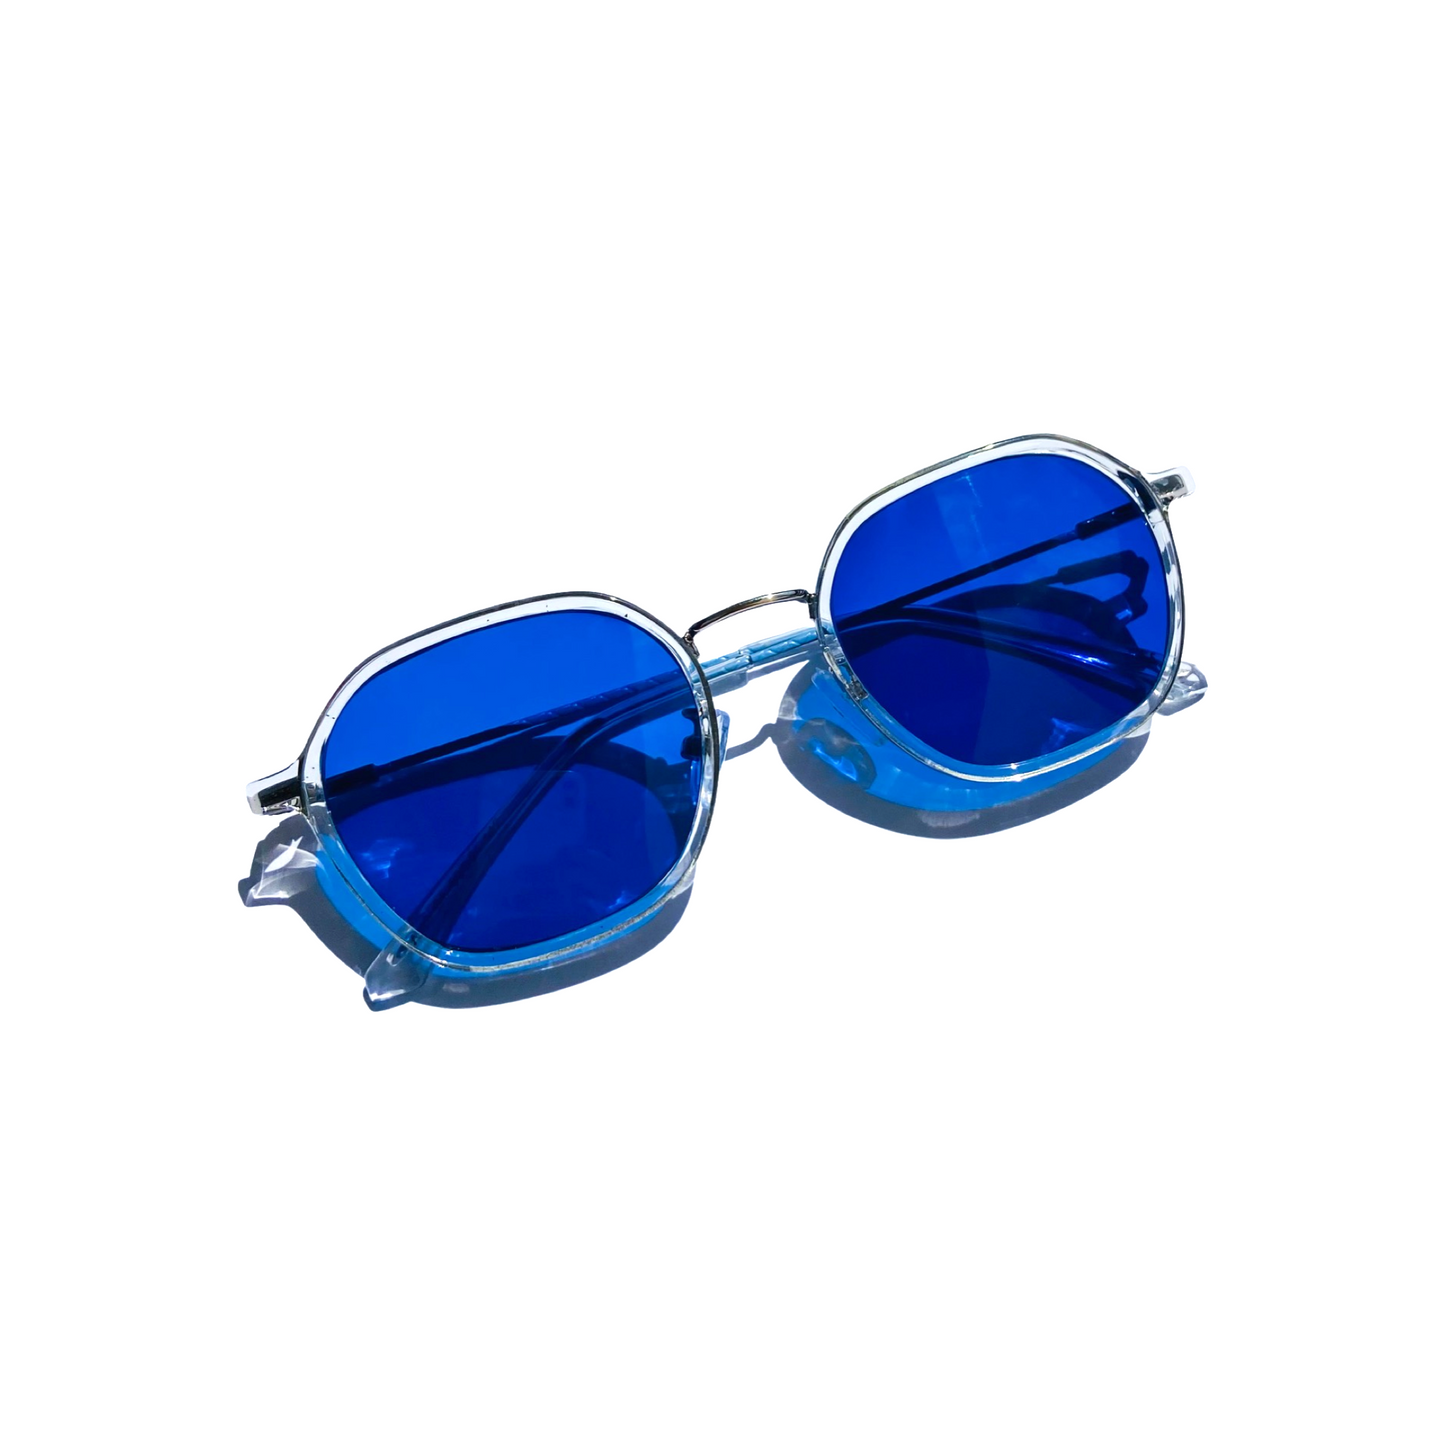 Deep Blue: Blue Sunglasses / Lentes de Sol Azul para Mujer y Hombre